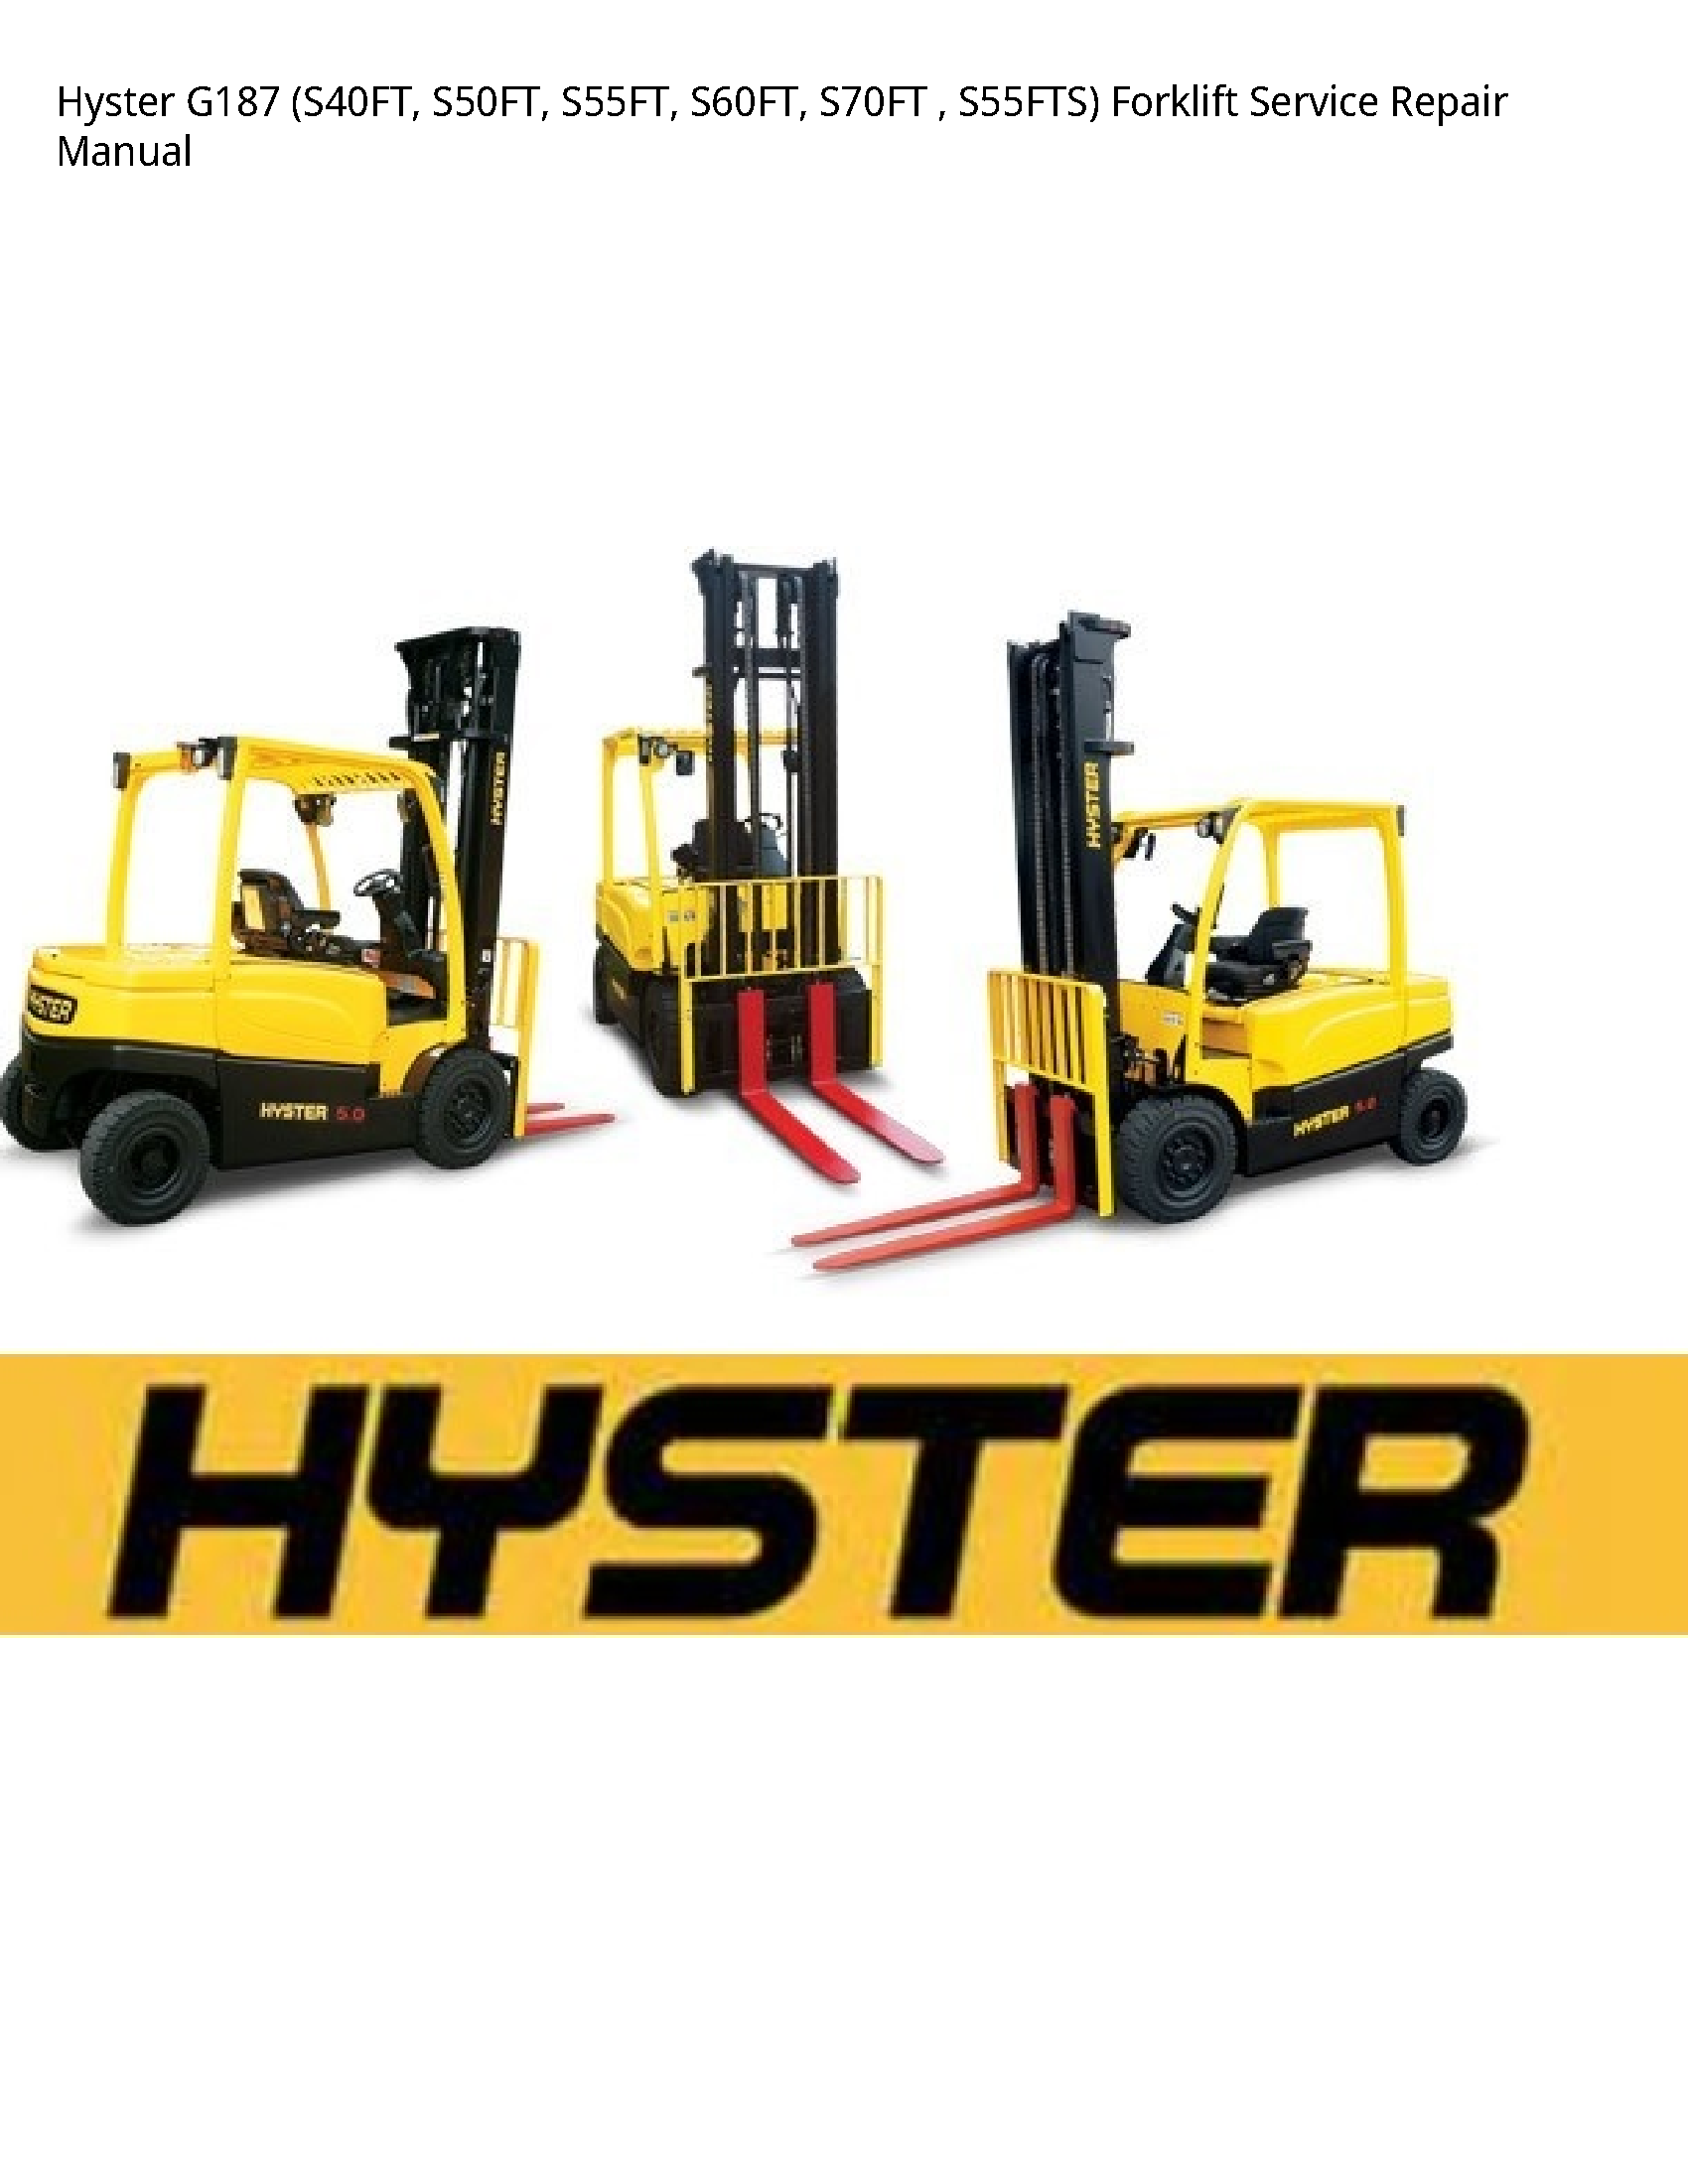 Hyster G187 Forklift manual